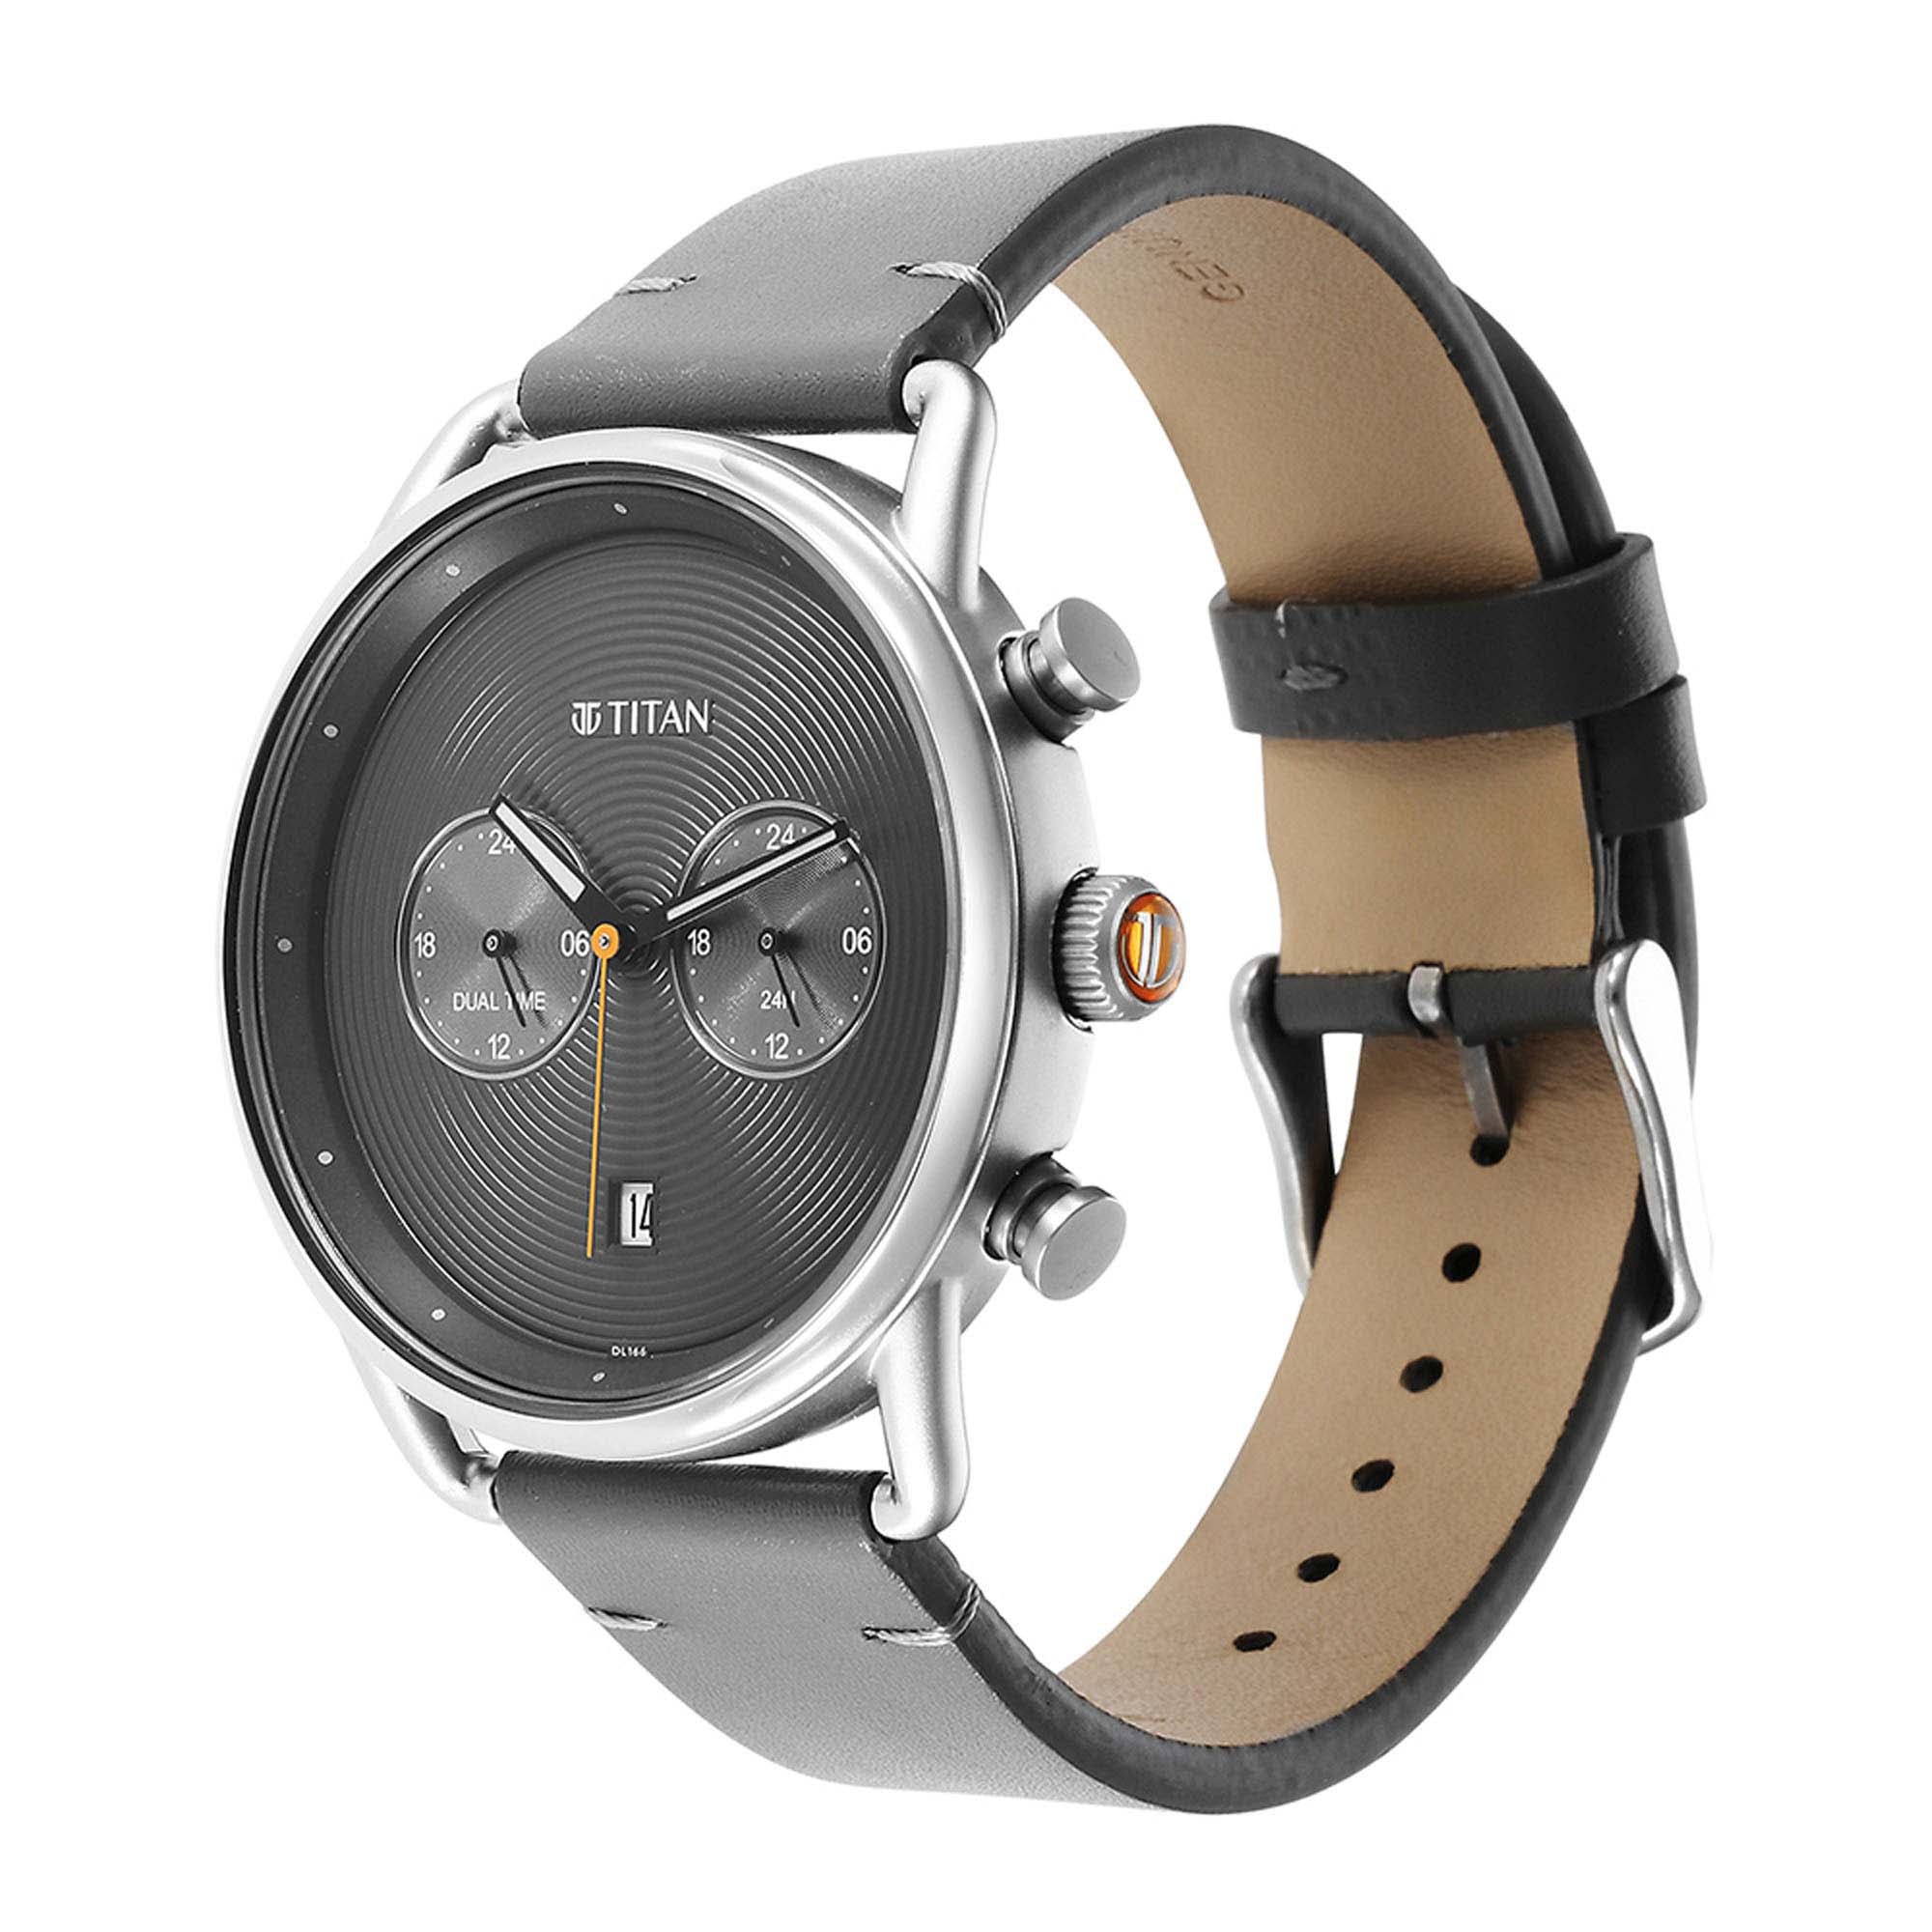 Titan Retro Analog Quartz Leather Strap watch for Men